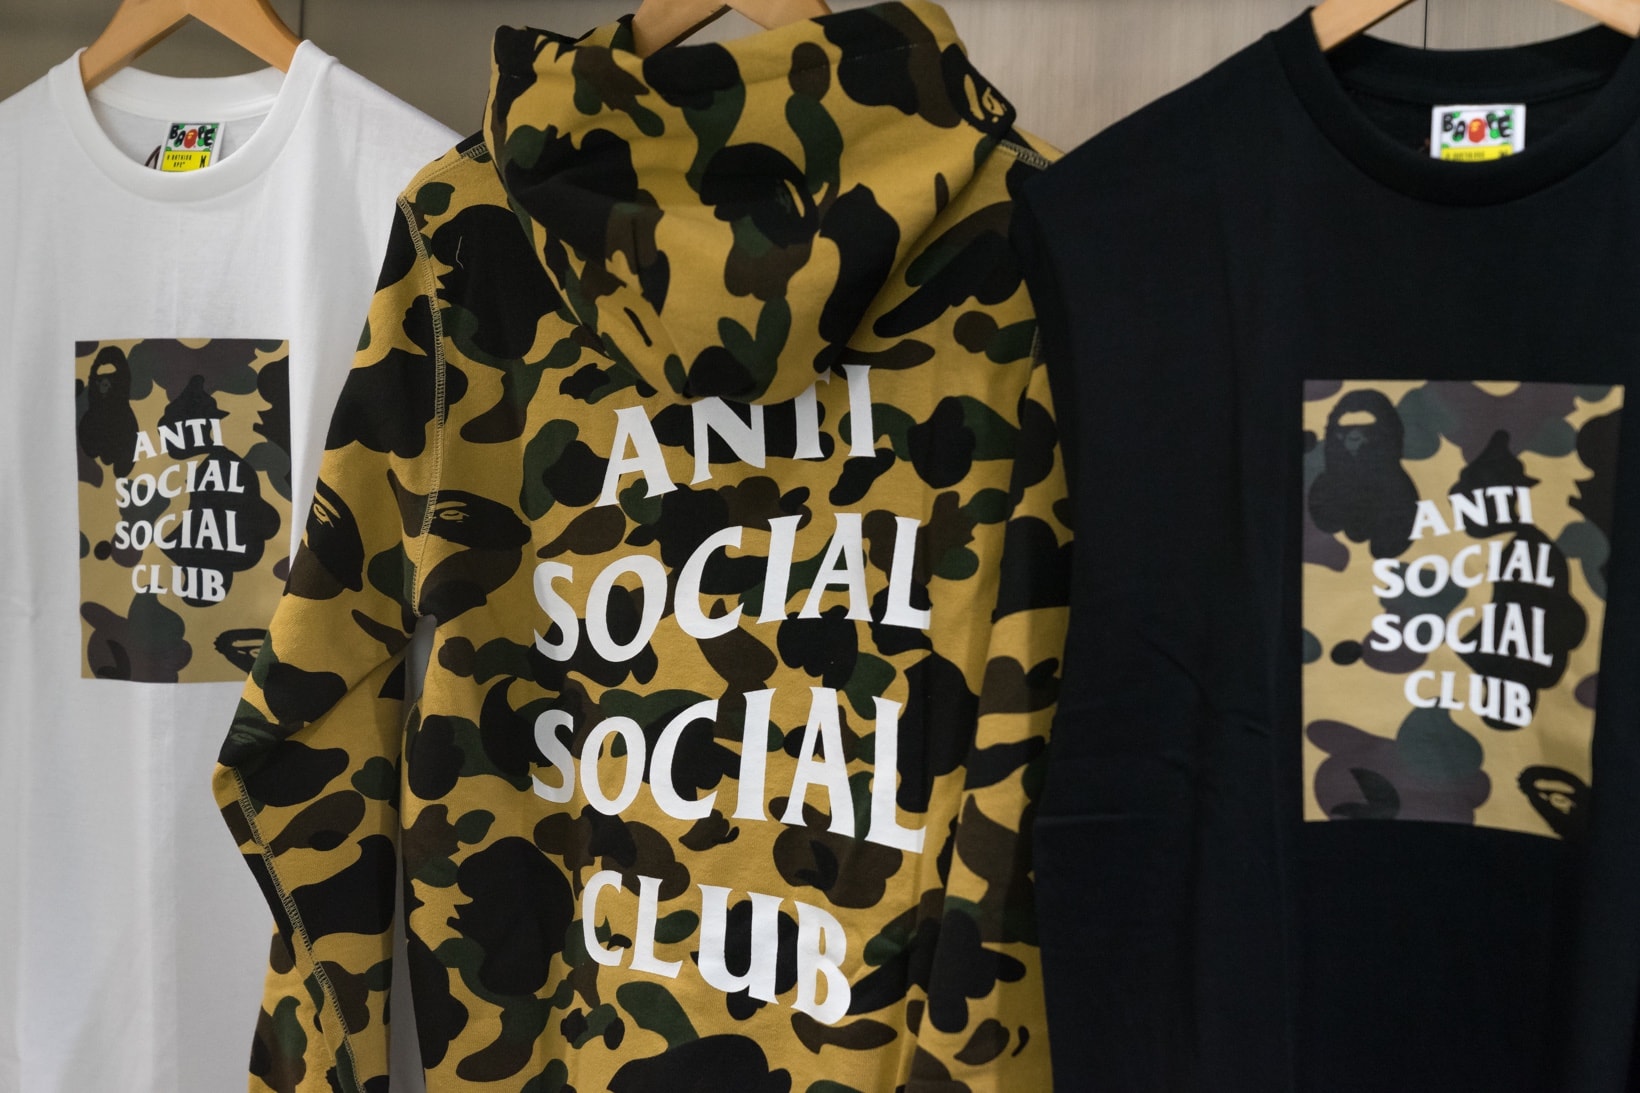 Anti Social Social Club x BAPE Collection NYC Launch